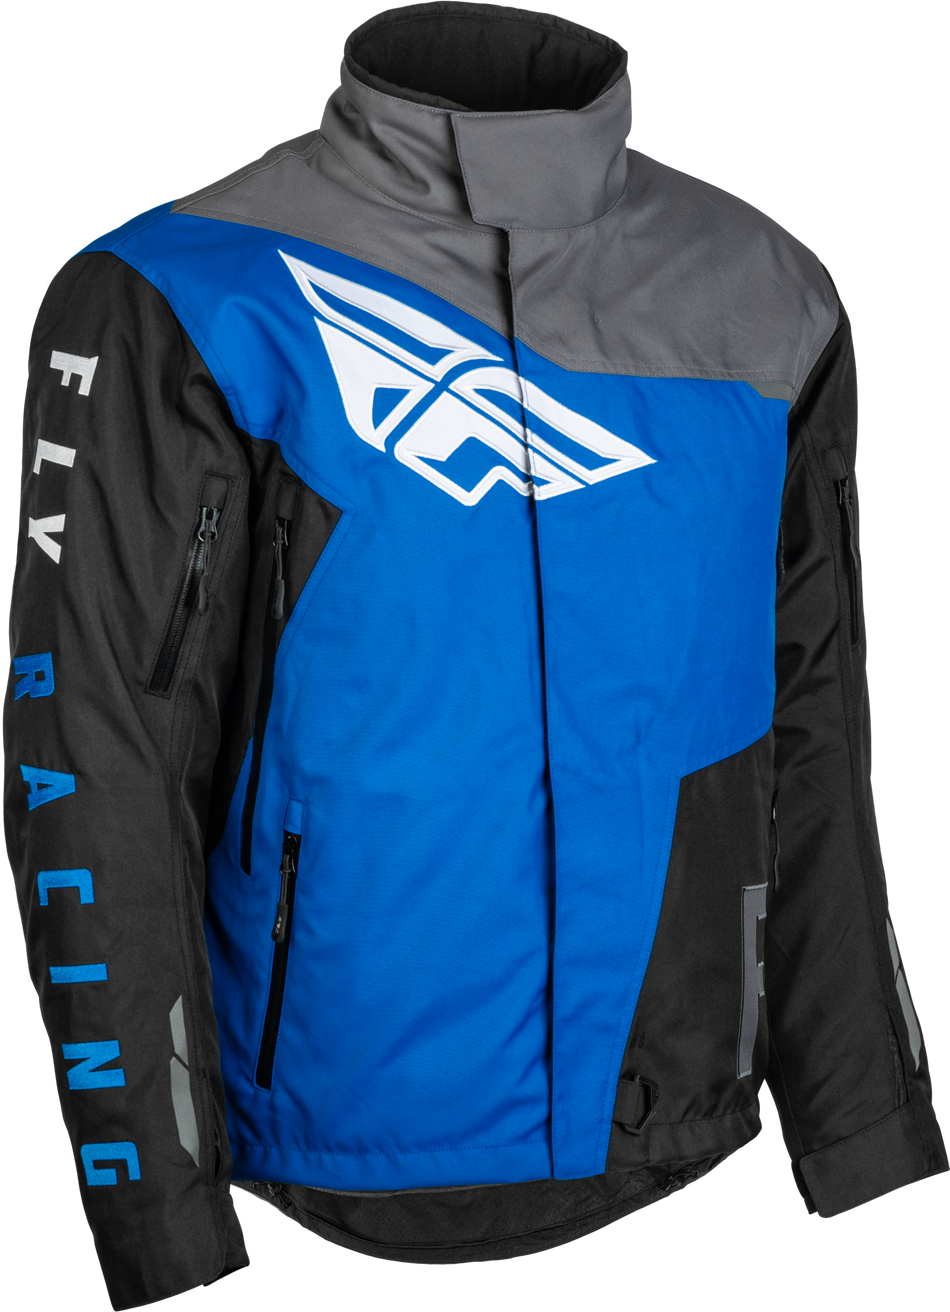 FLY RACING Youth Snx Pro Jacket Black/Grey/Blue Yxs 470-4116YXS